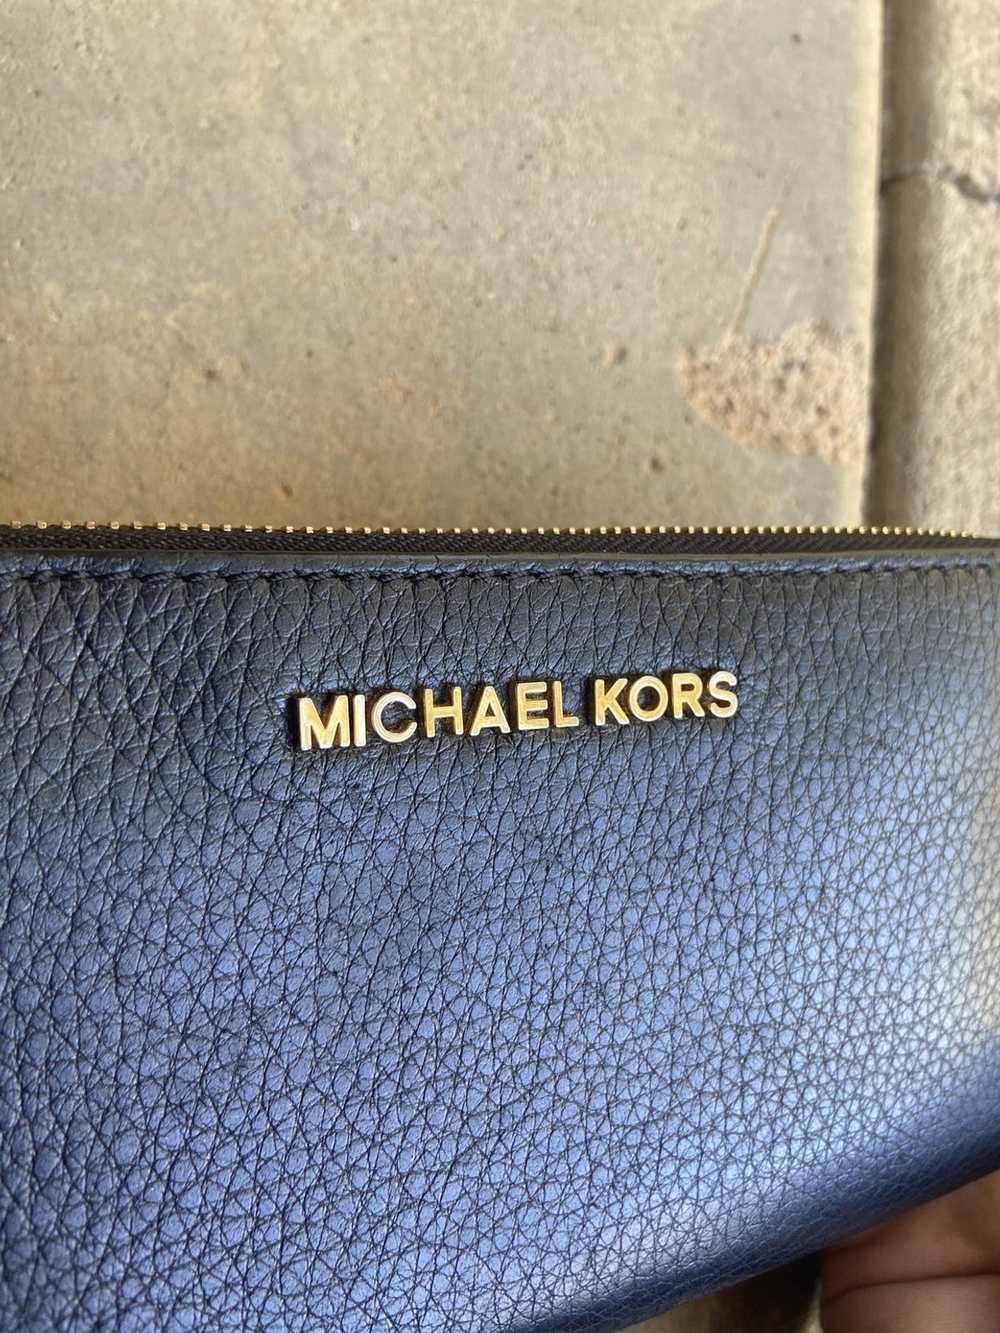 Michael Kors Michael kors wallet - image 3